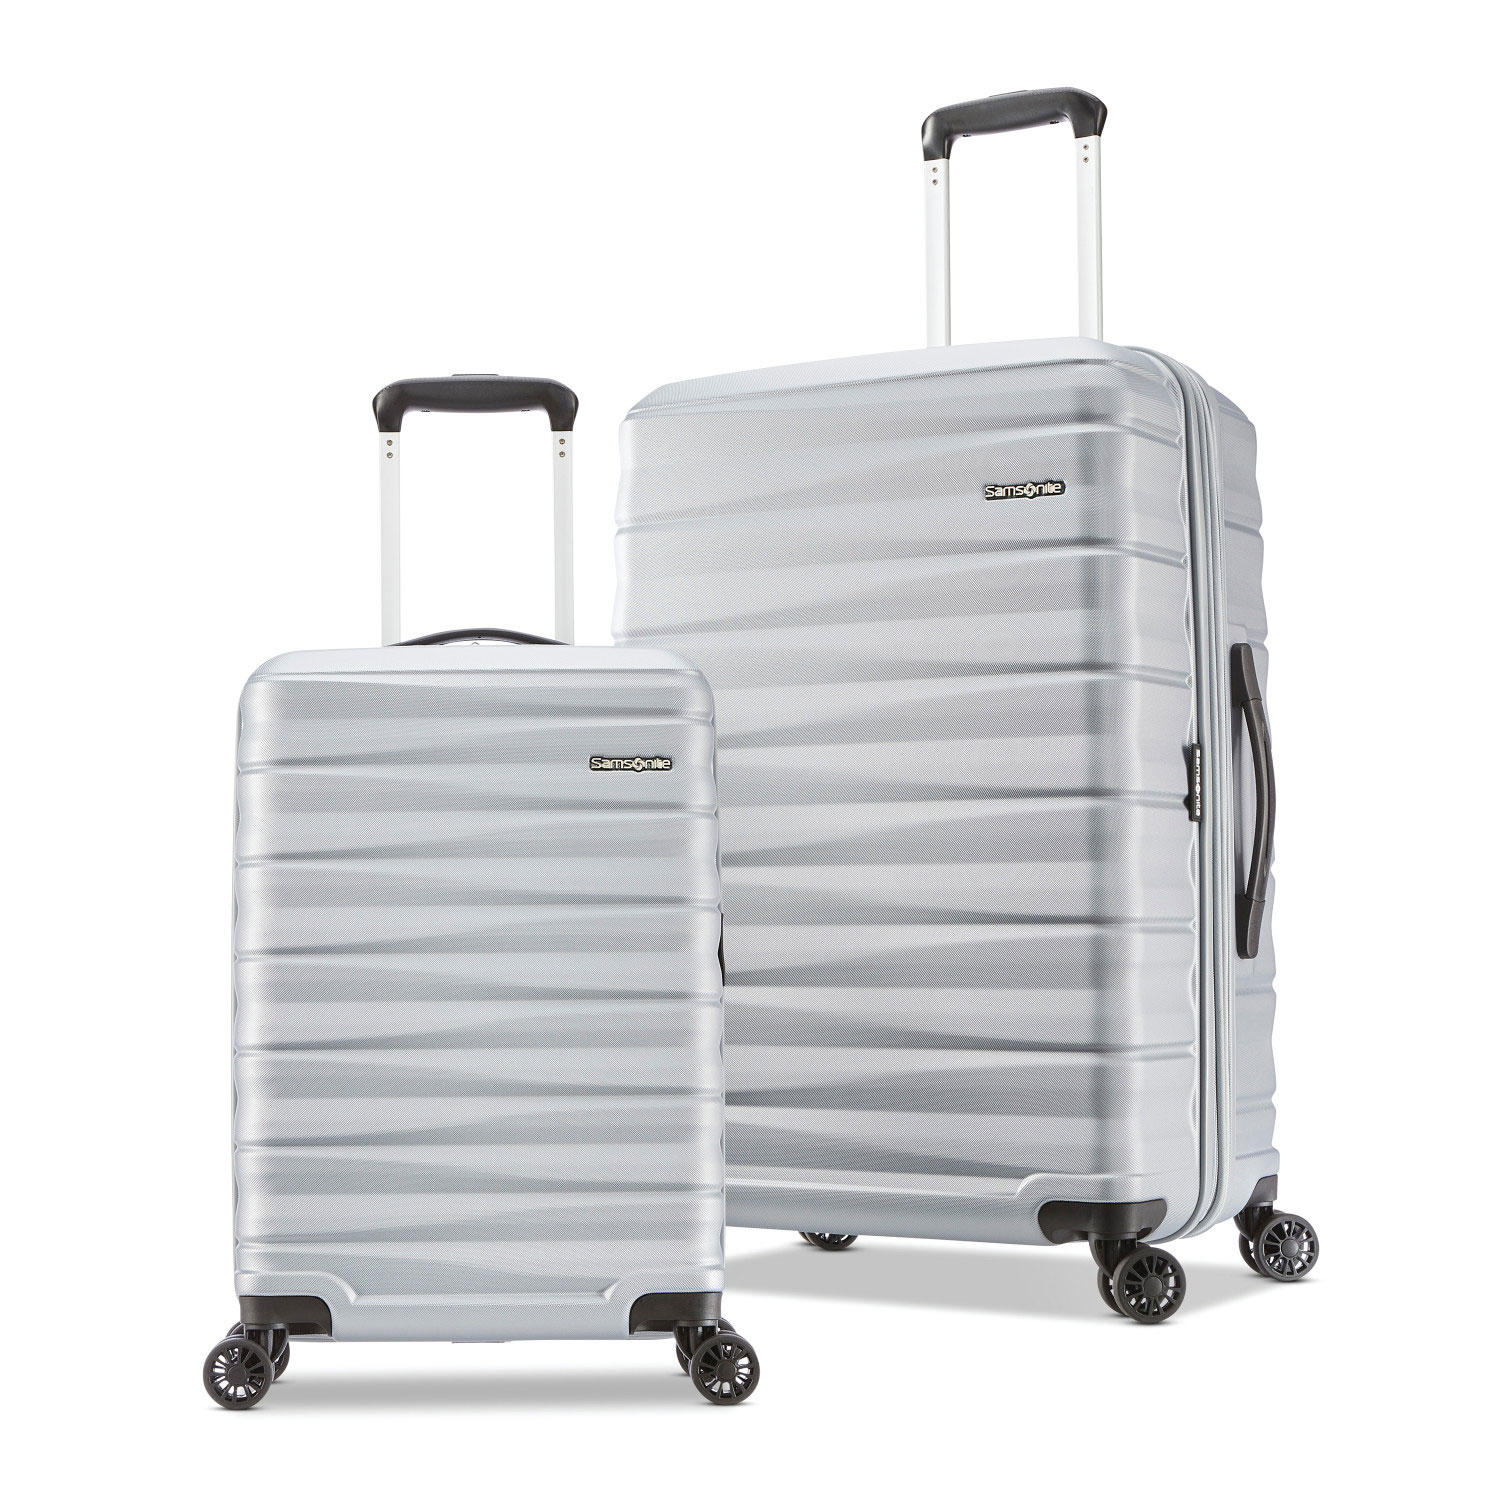 Samsonite Kingsbury Hardside Suitcase 2-Piece Luggage Set